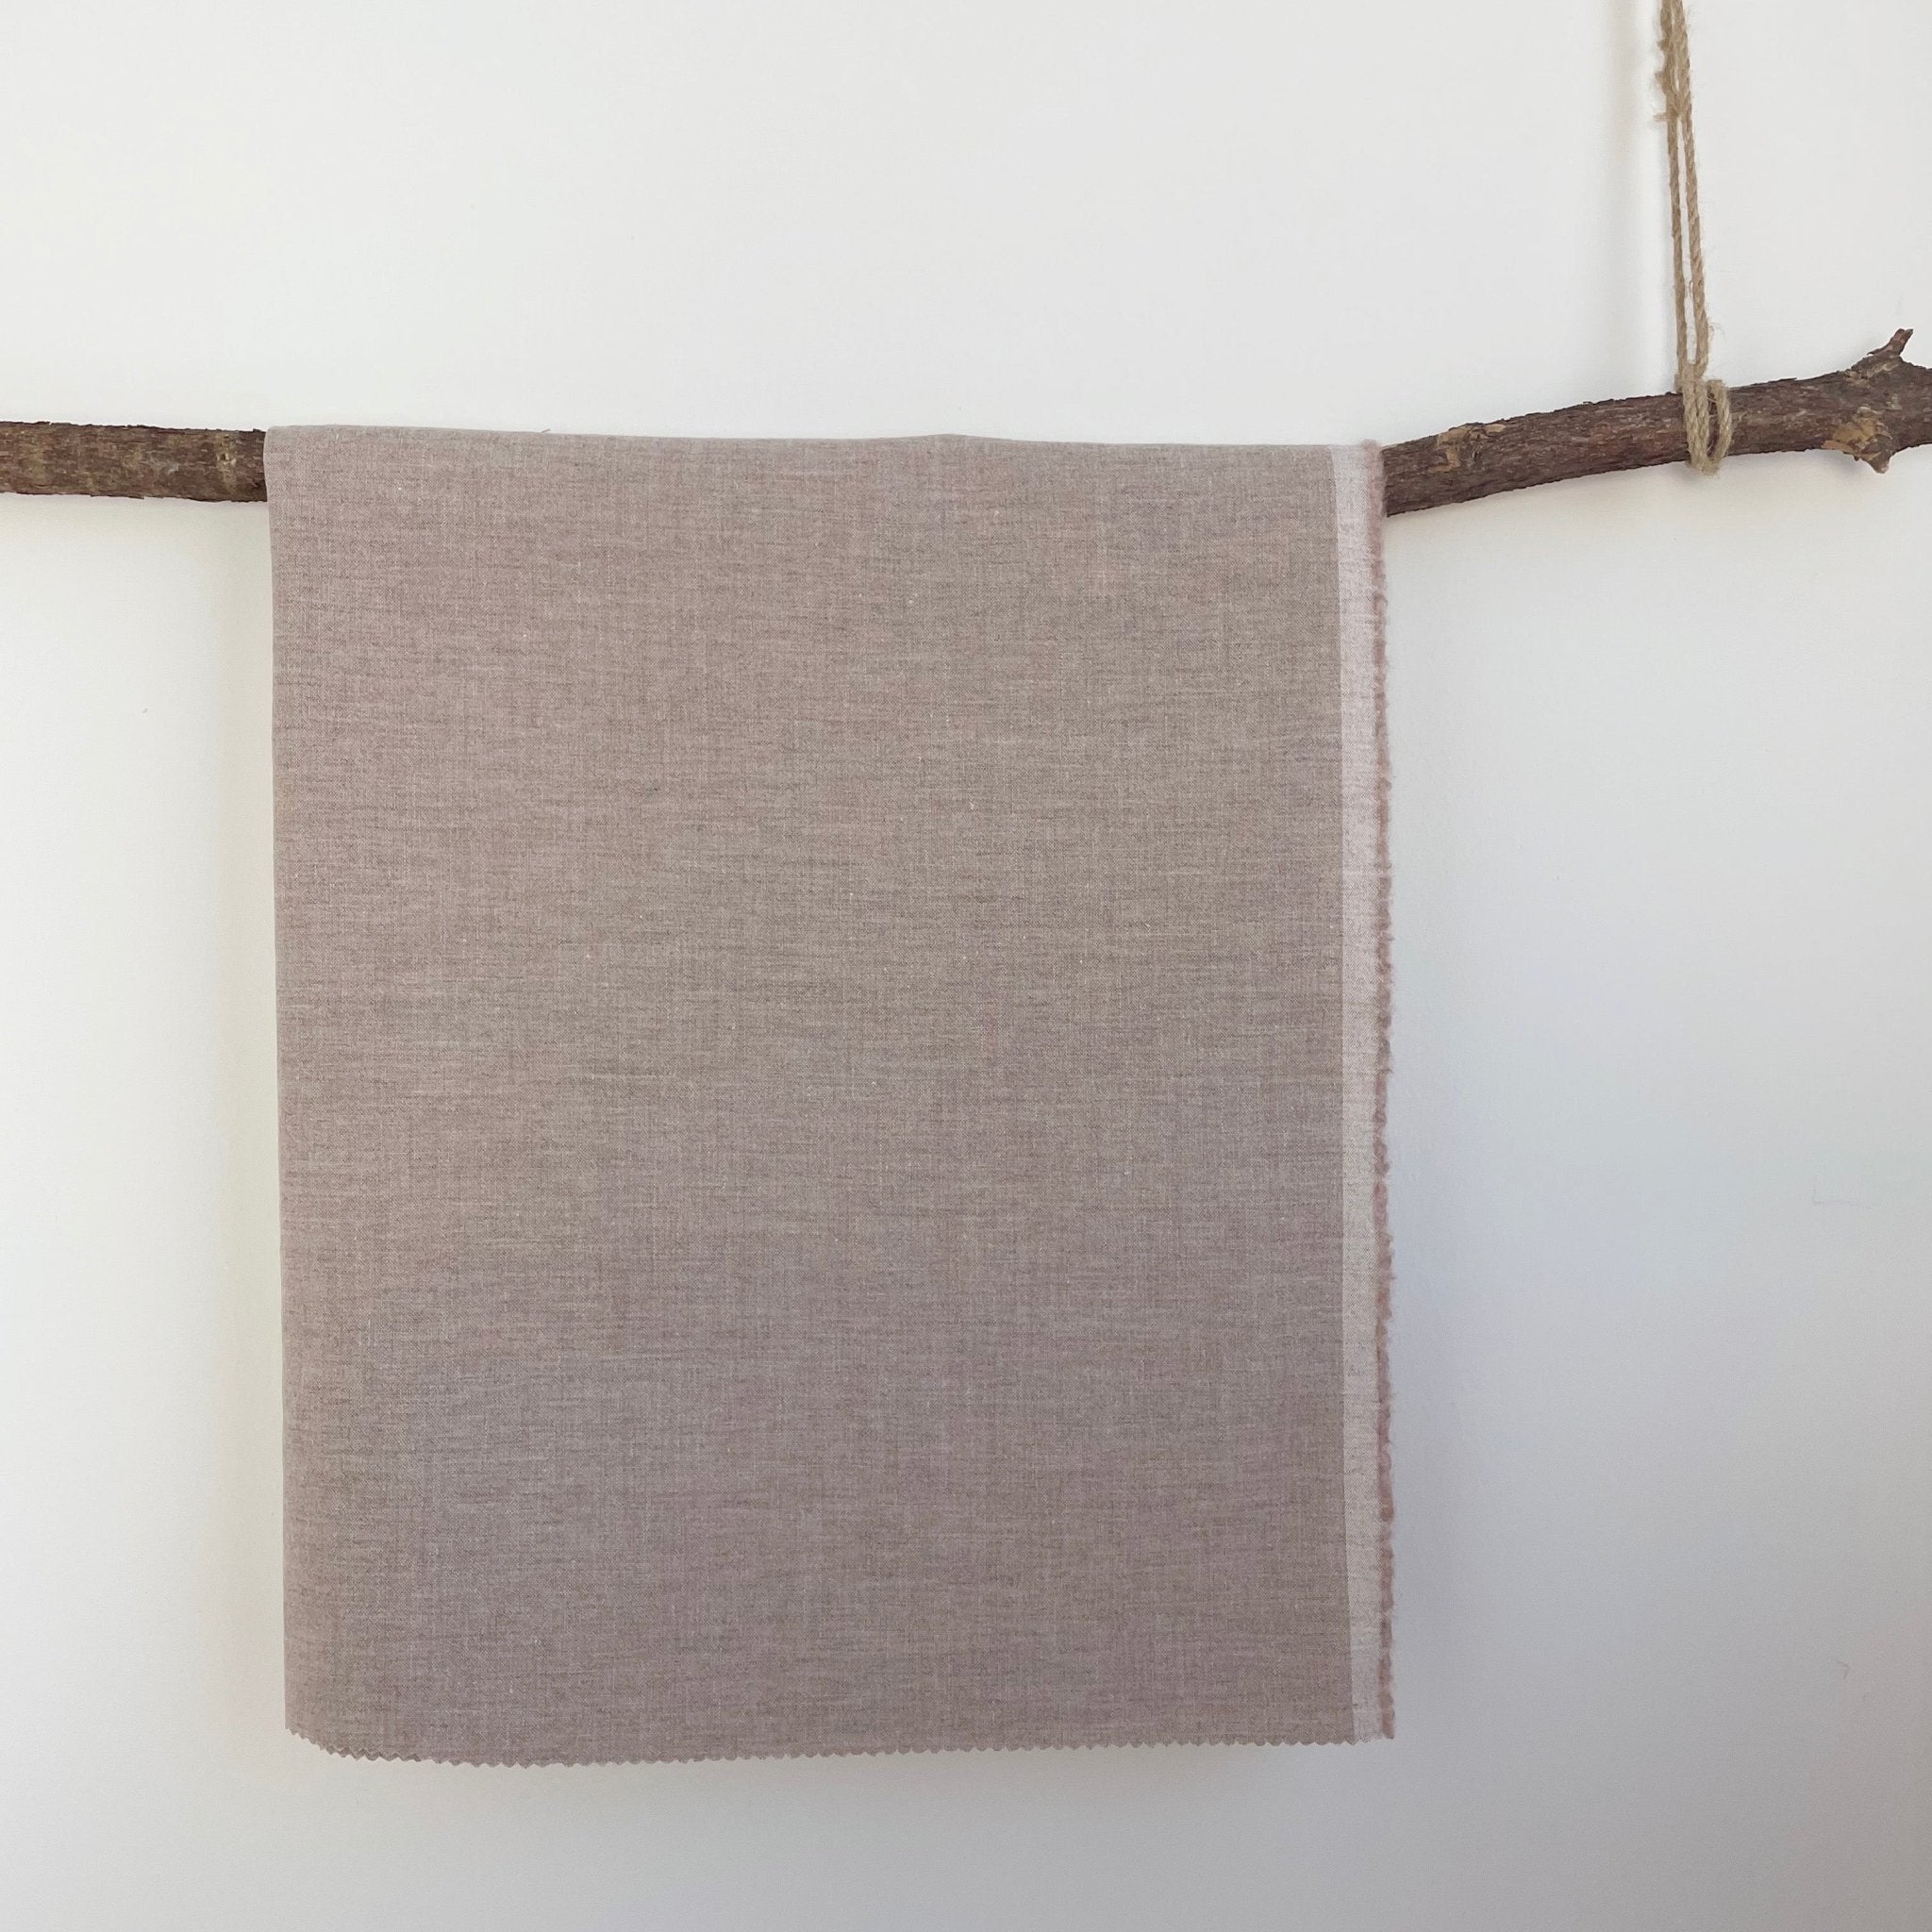 Linen Wool Fabric 7243 - The Linen Lab - 7243 PINK